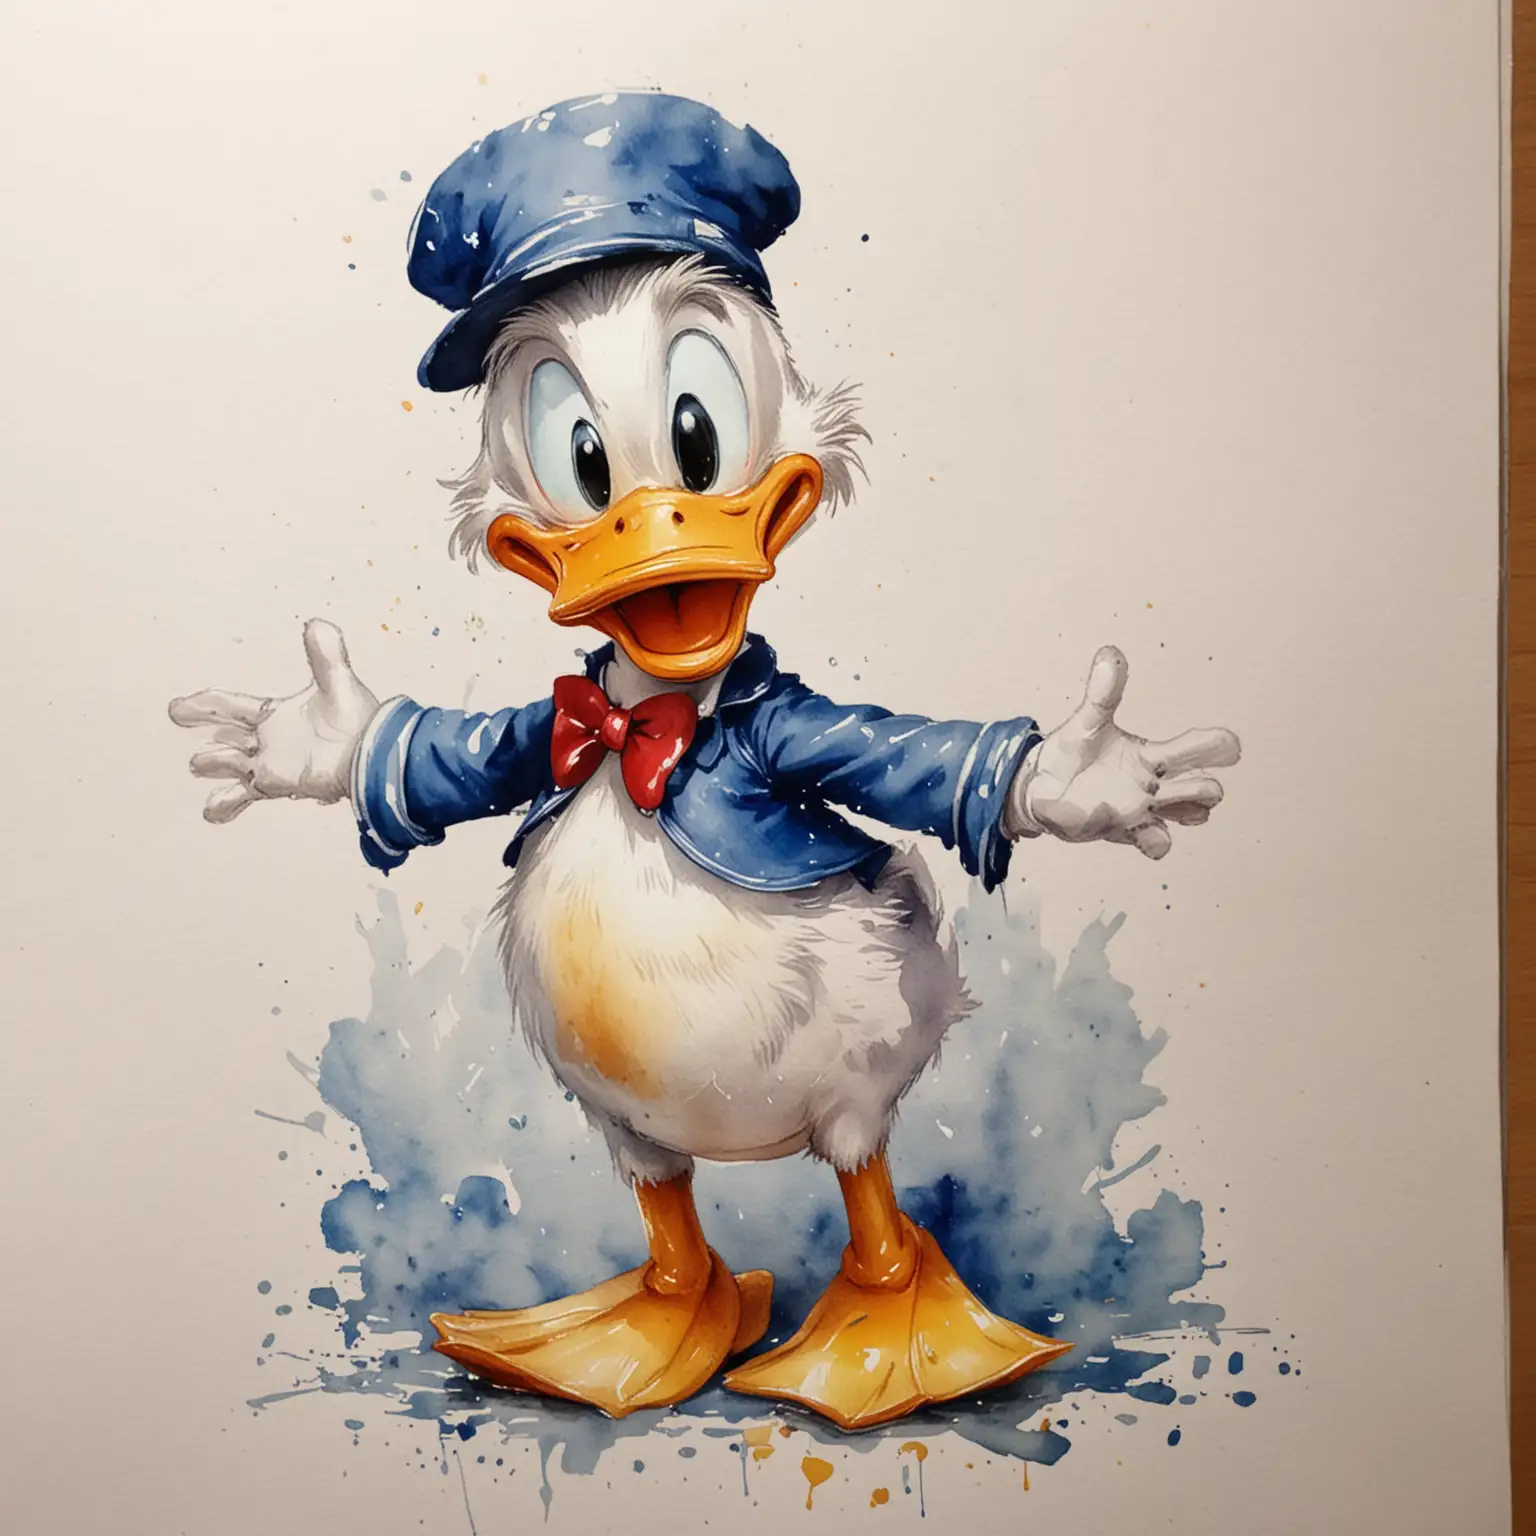 Cheerful Donald Duck in Vibrant Watercolor Portrait